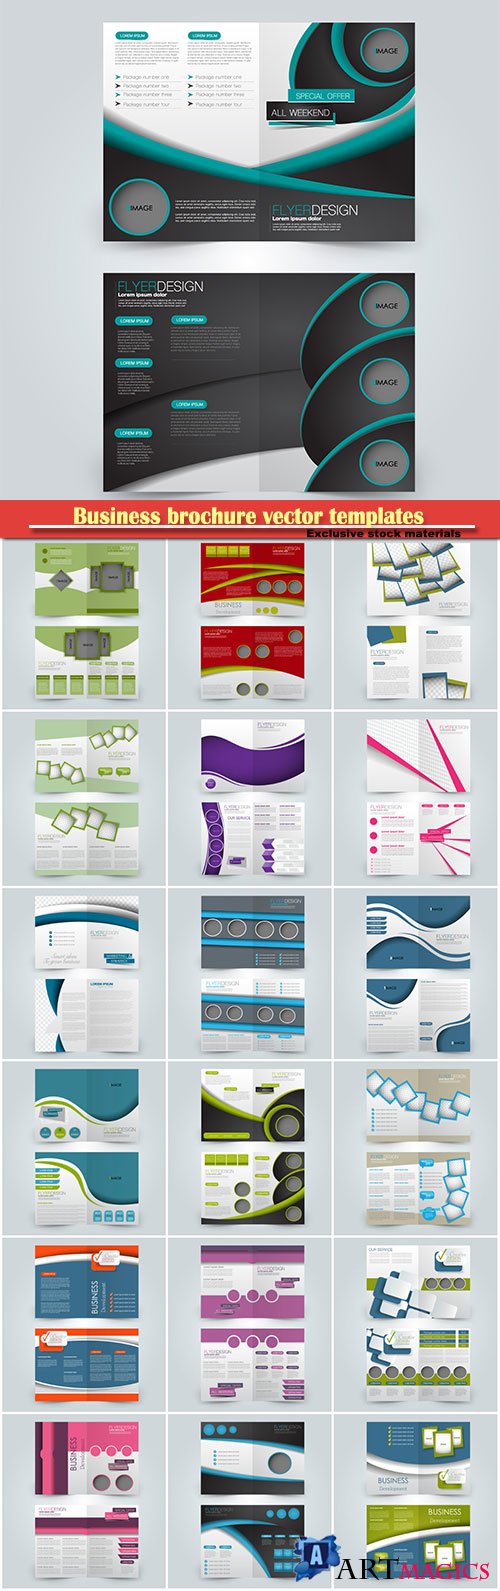 Business brochure vector templates, magazine cover, business mockup, education, presentation, report # 53